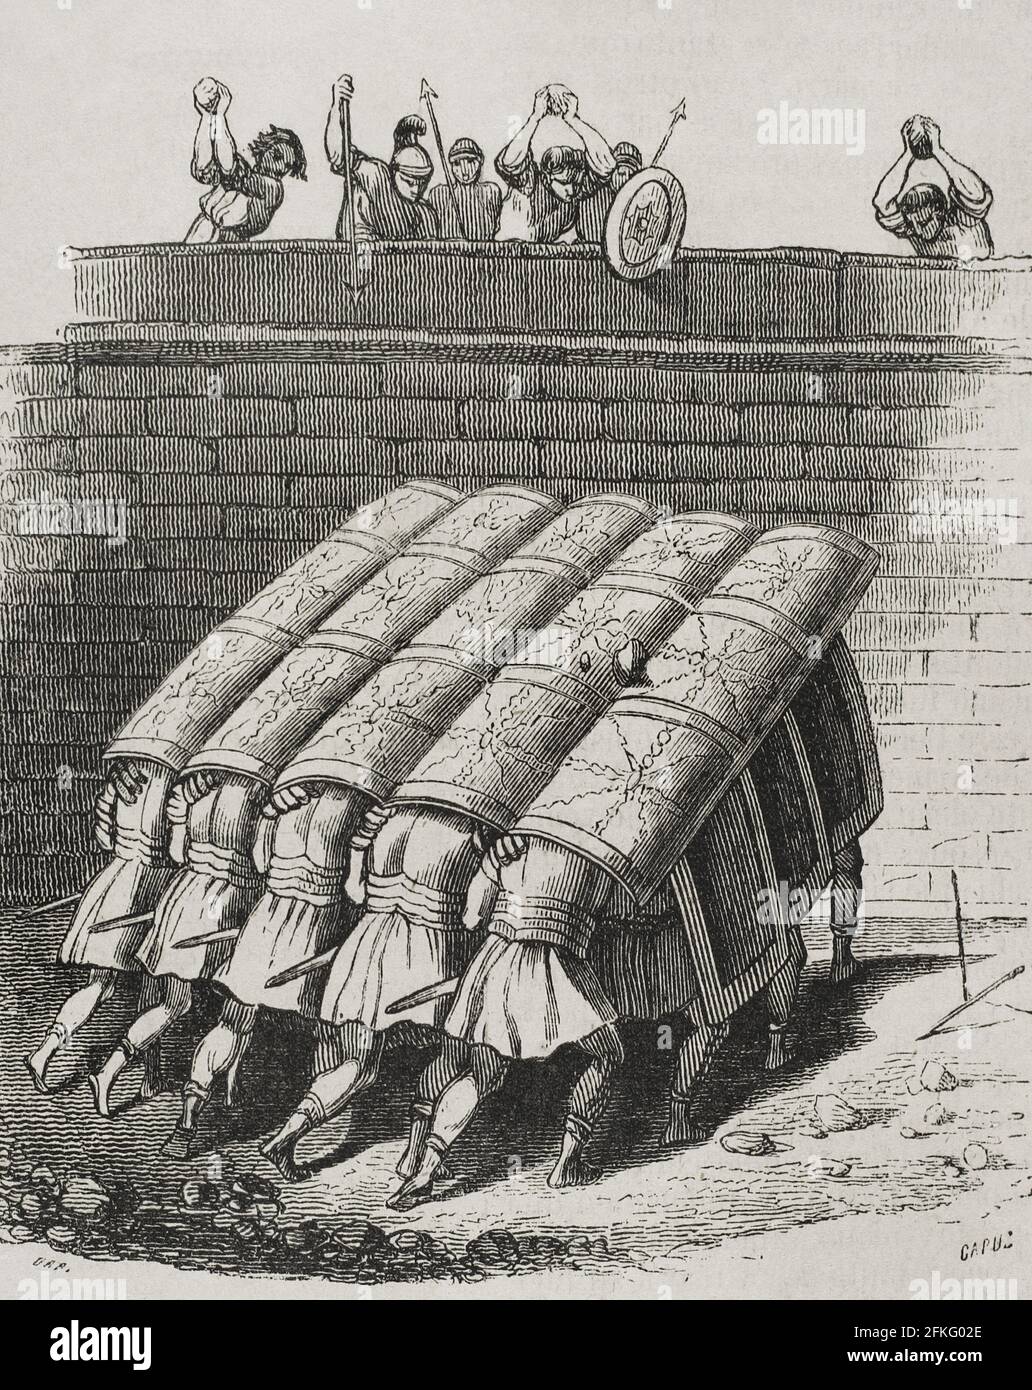 Roman Empire. Roman legions in the testudo or tortoise formation. Engraving by Capuz. Historia General de España by Father Mariana. Madrid, 1852. Stock Photo